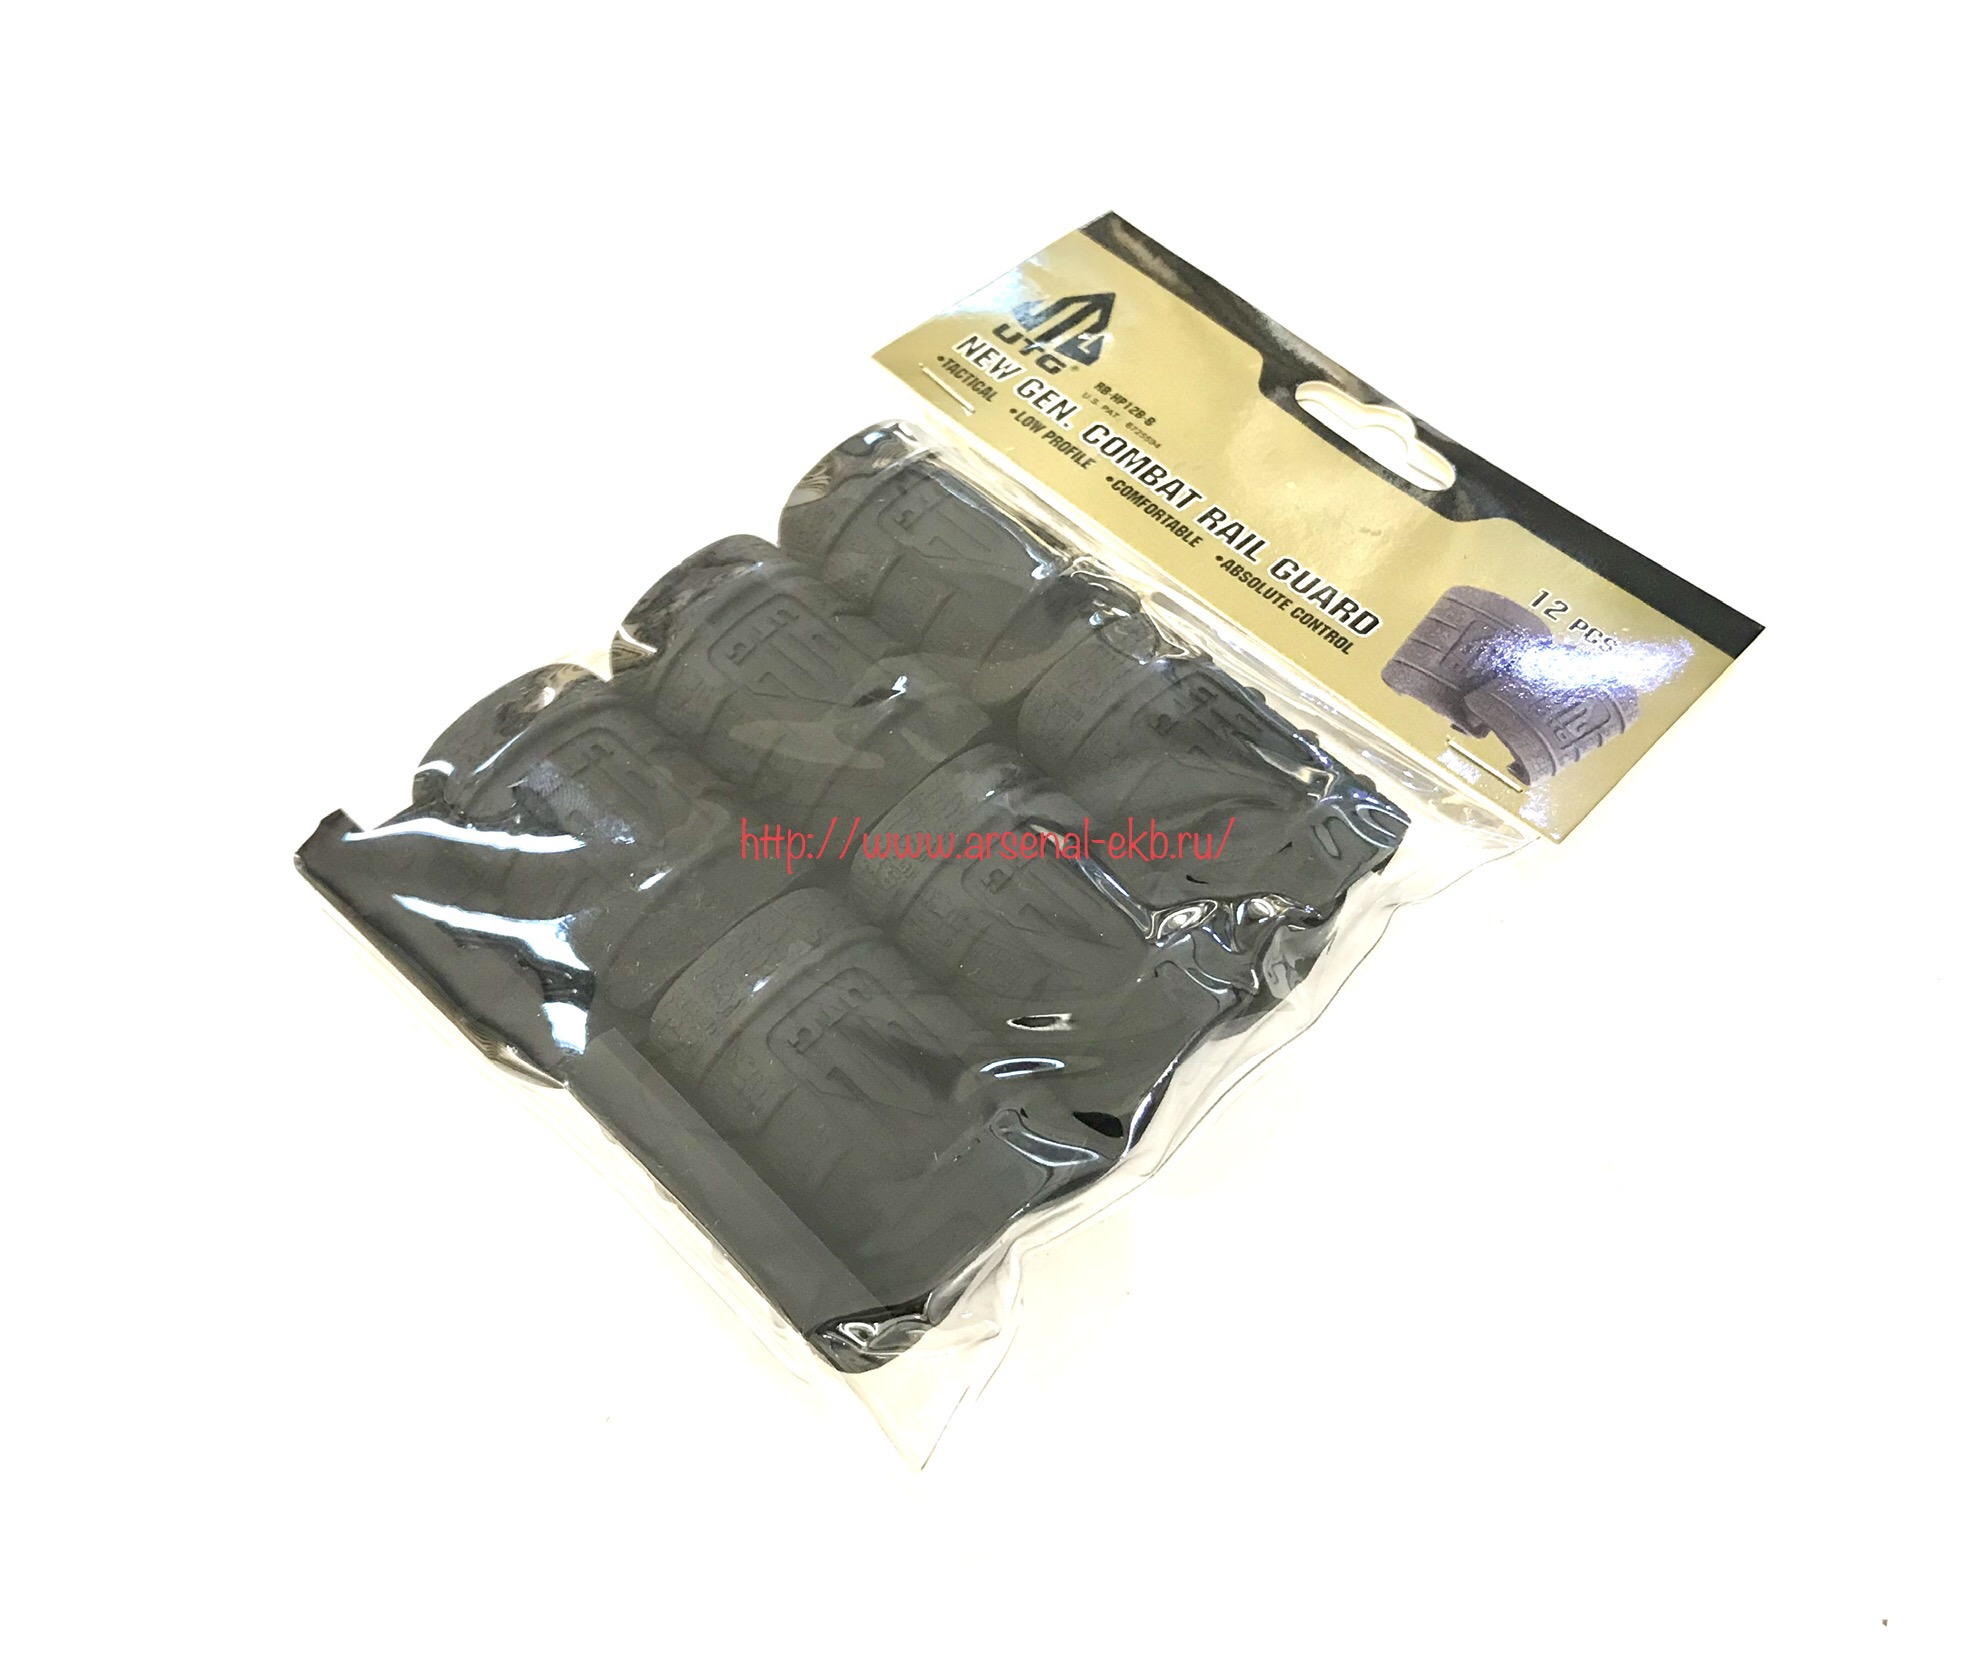 Комплект накладок Leapers UTG на Weaver / Picattiny для защиты рук